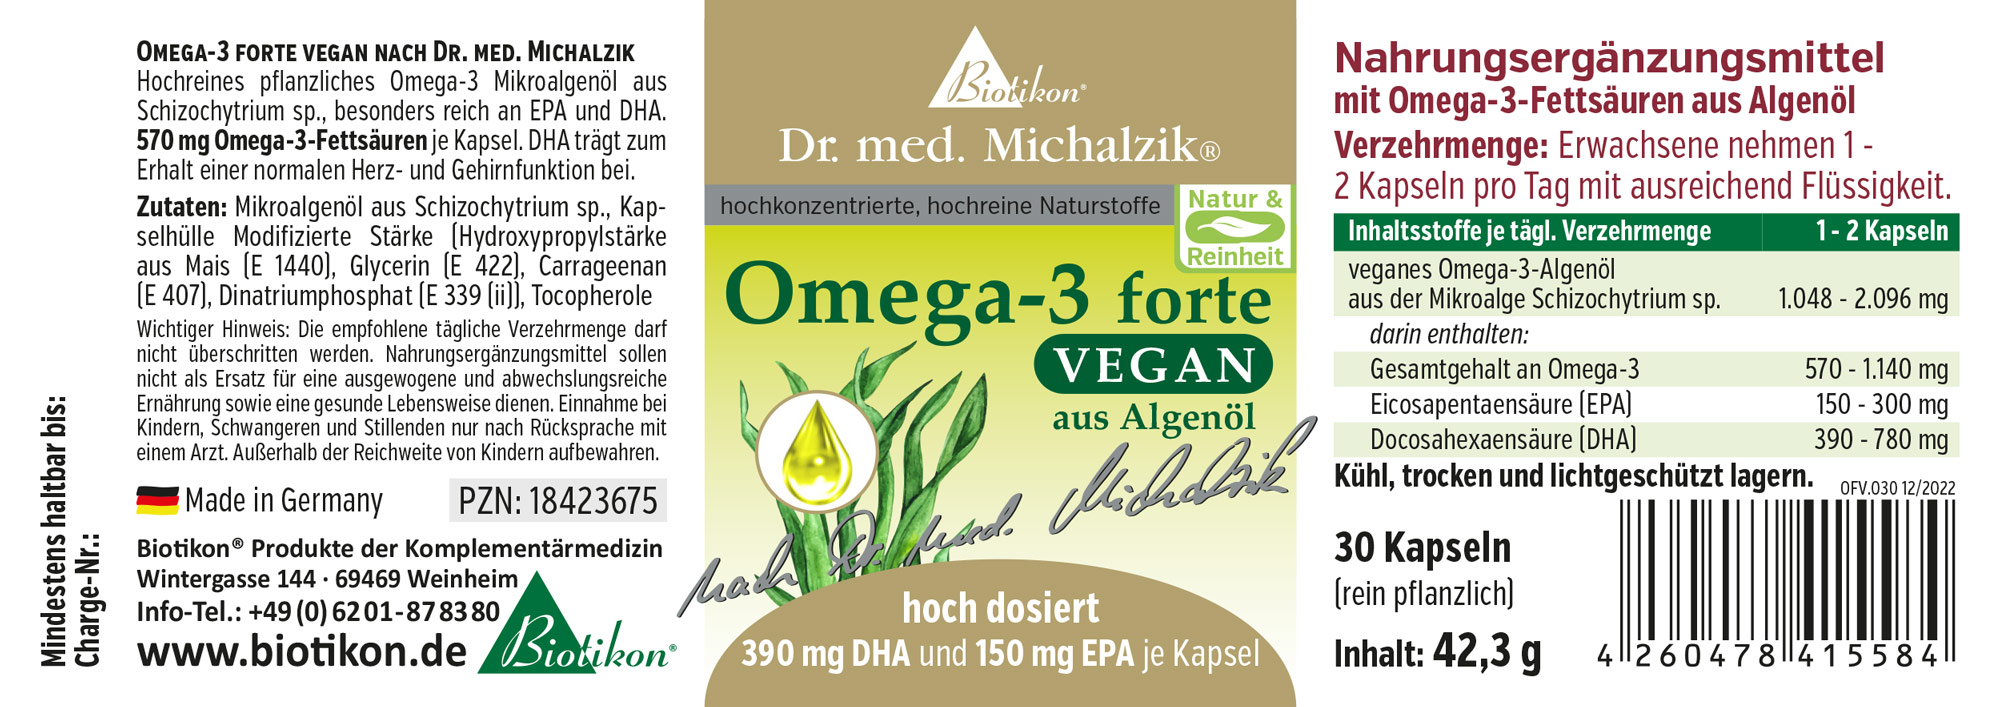 Omega-3 forte vegan - 30 capsules